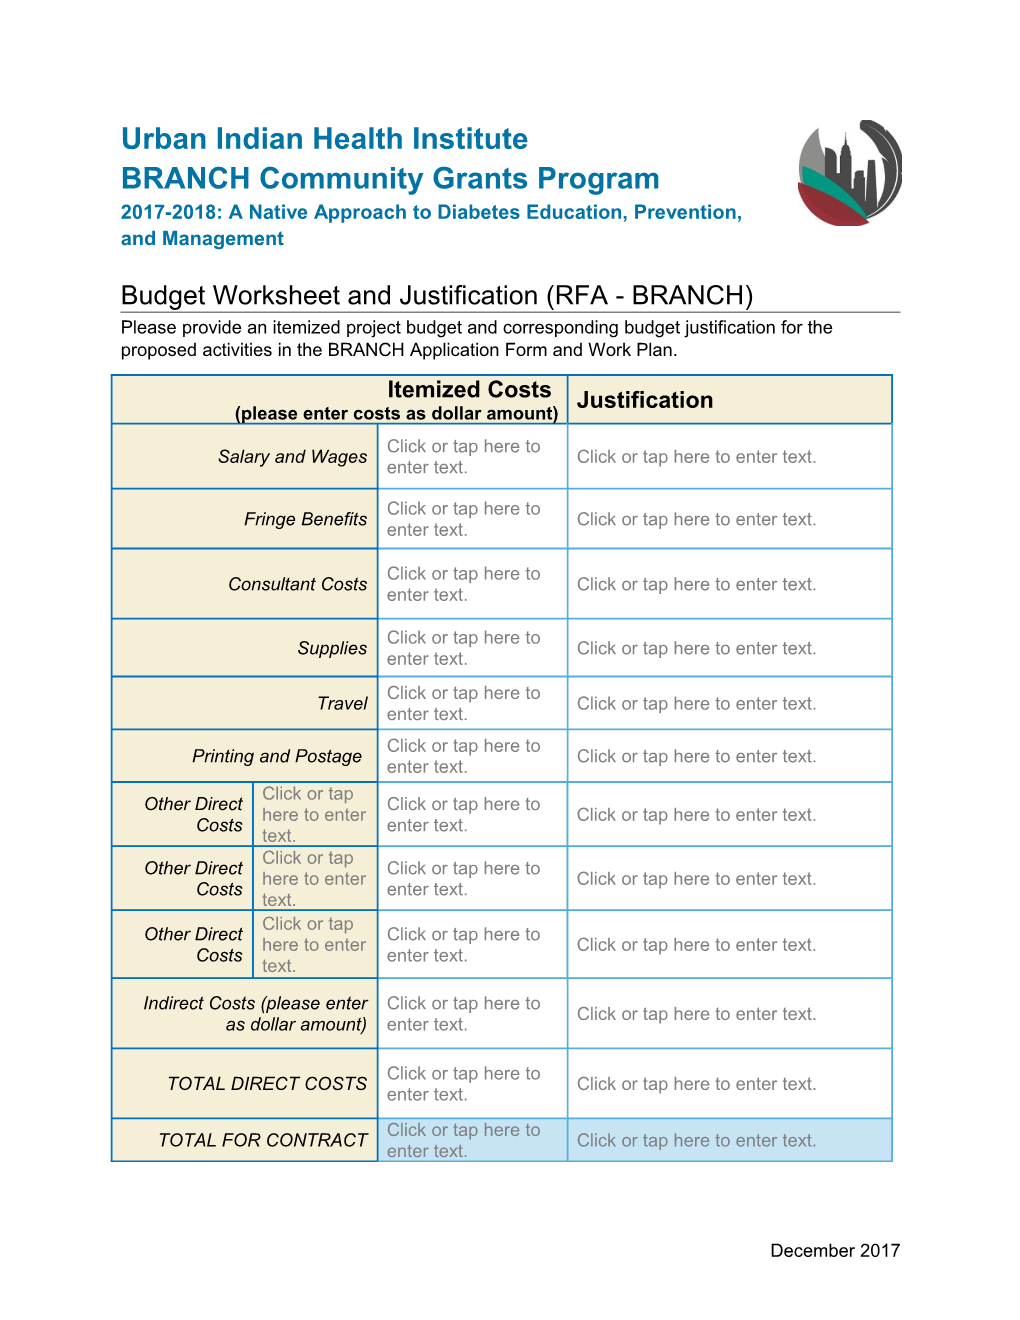 BRANCH Community Grants Program